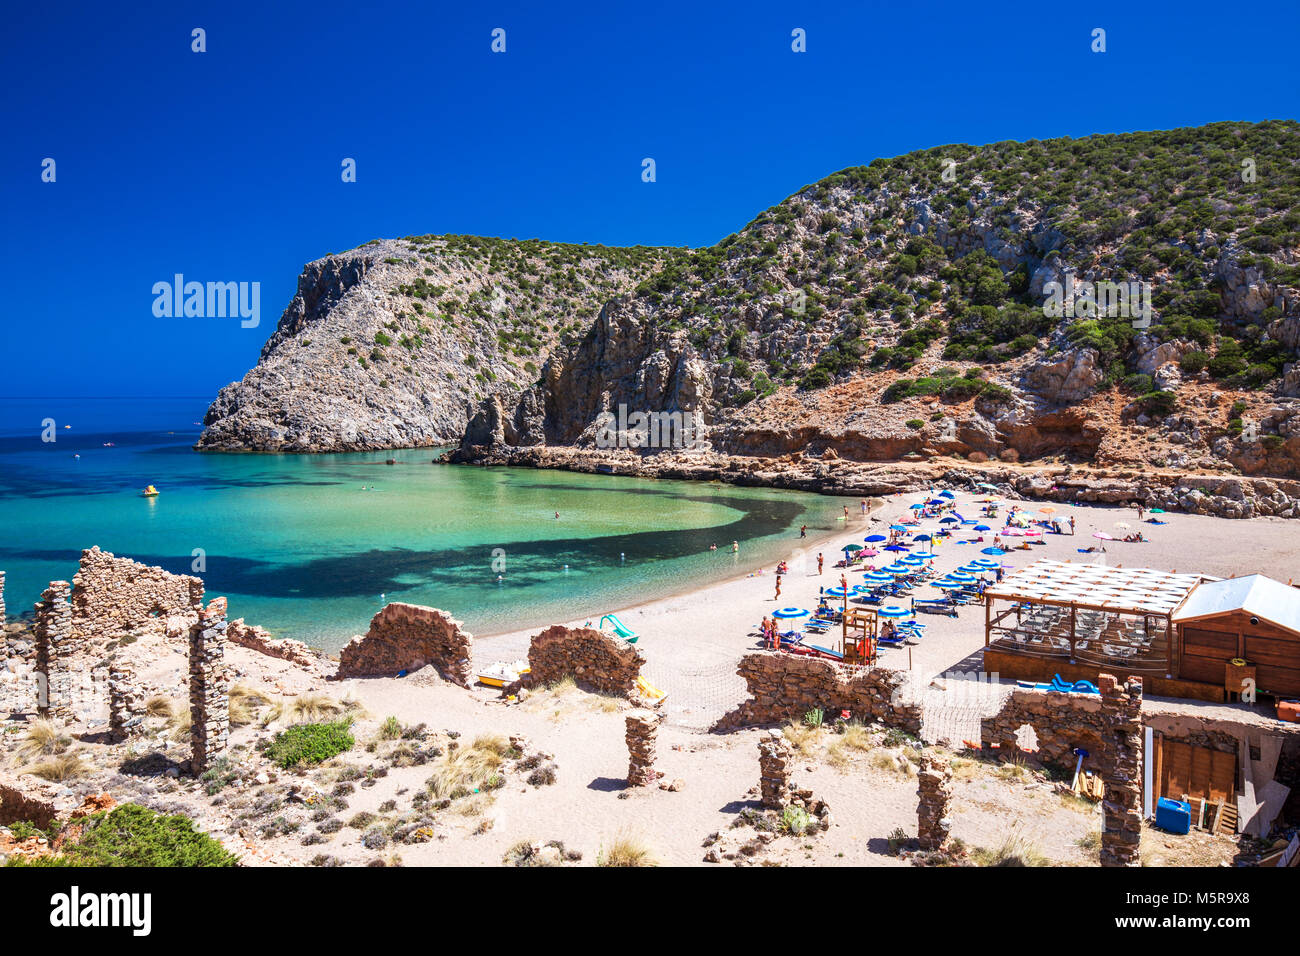 CALA DOMESTICA, SARDINIA - August 2017 - Cala Domestica beach, Costa Verde,  Sardinia, Italy. Sardinia is the second largest island in mediterranean s Stock Photo